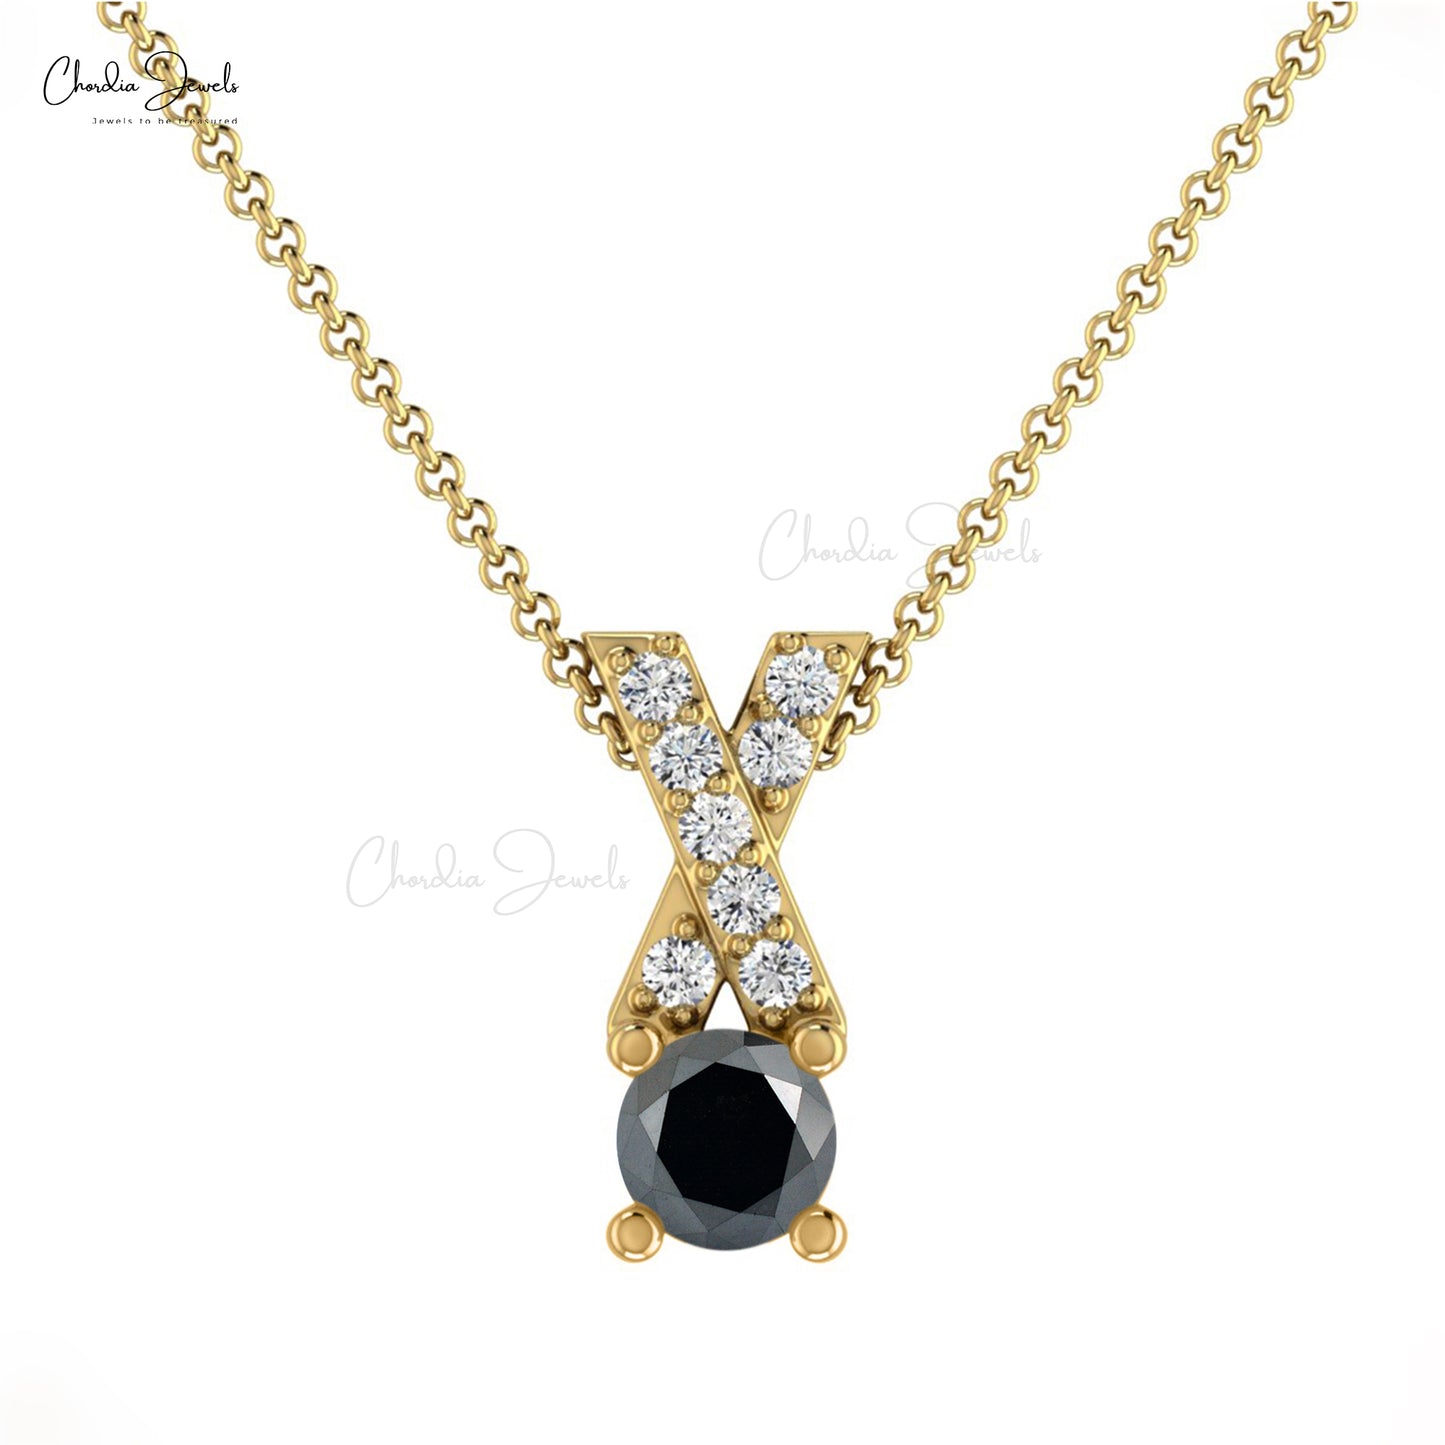 Stunning AAA Black diamond Criss Cross Pendant in 14K Gold with White Diamond's 5mm Round Cut Handmade Gemstone Pendant For April Birthstone